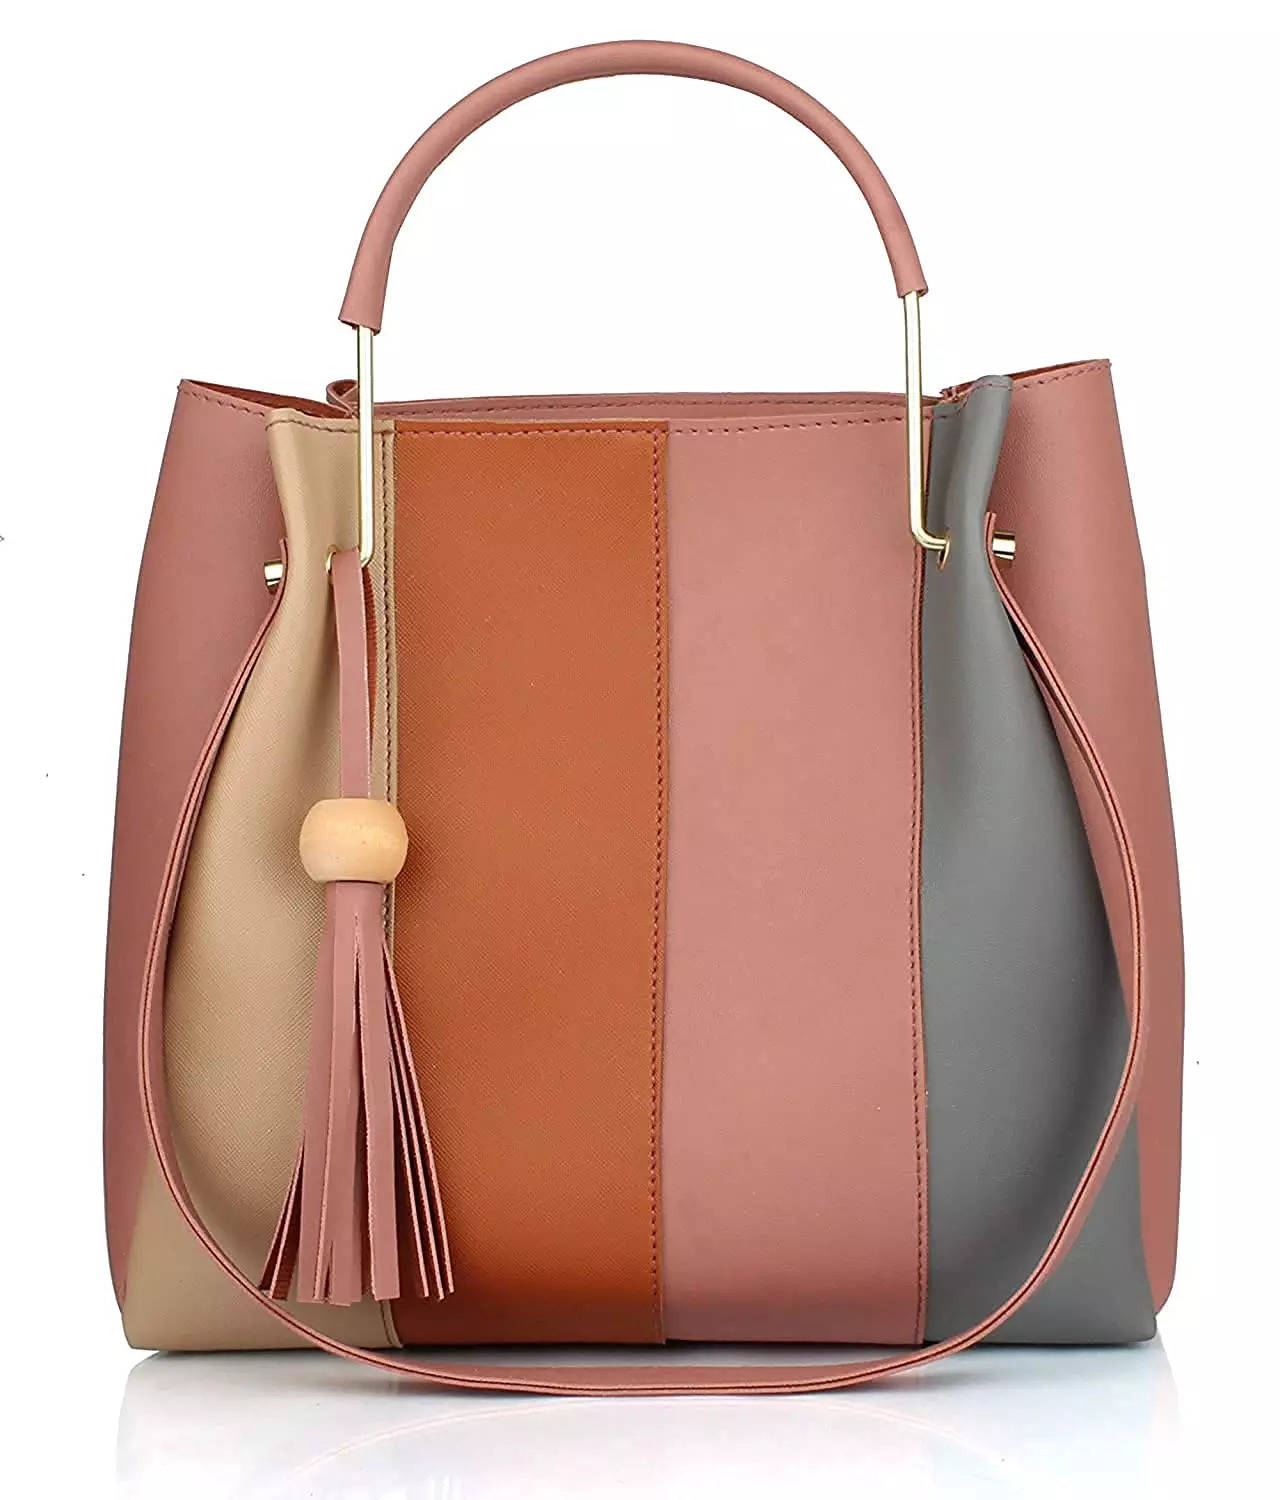 Ladies handbags: Handbags Under 500 For Women - The Economic Times